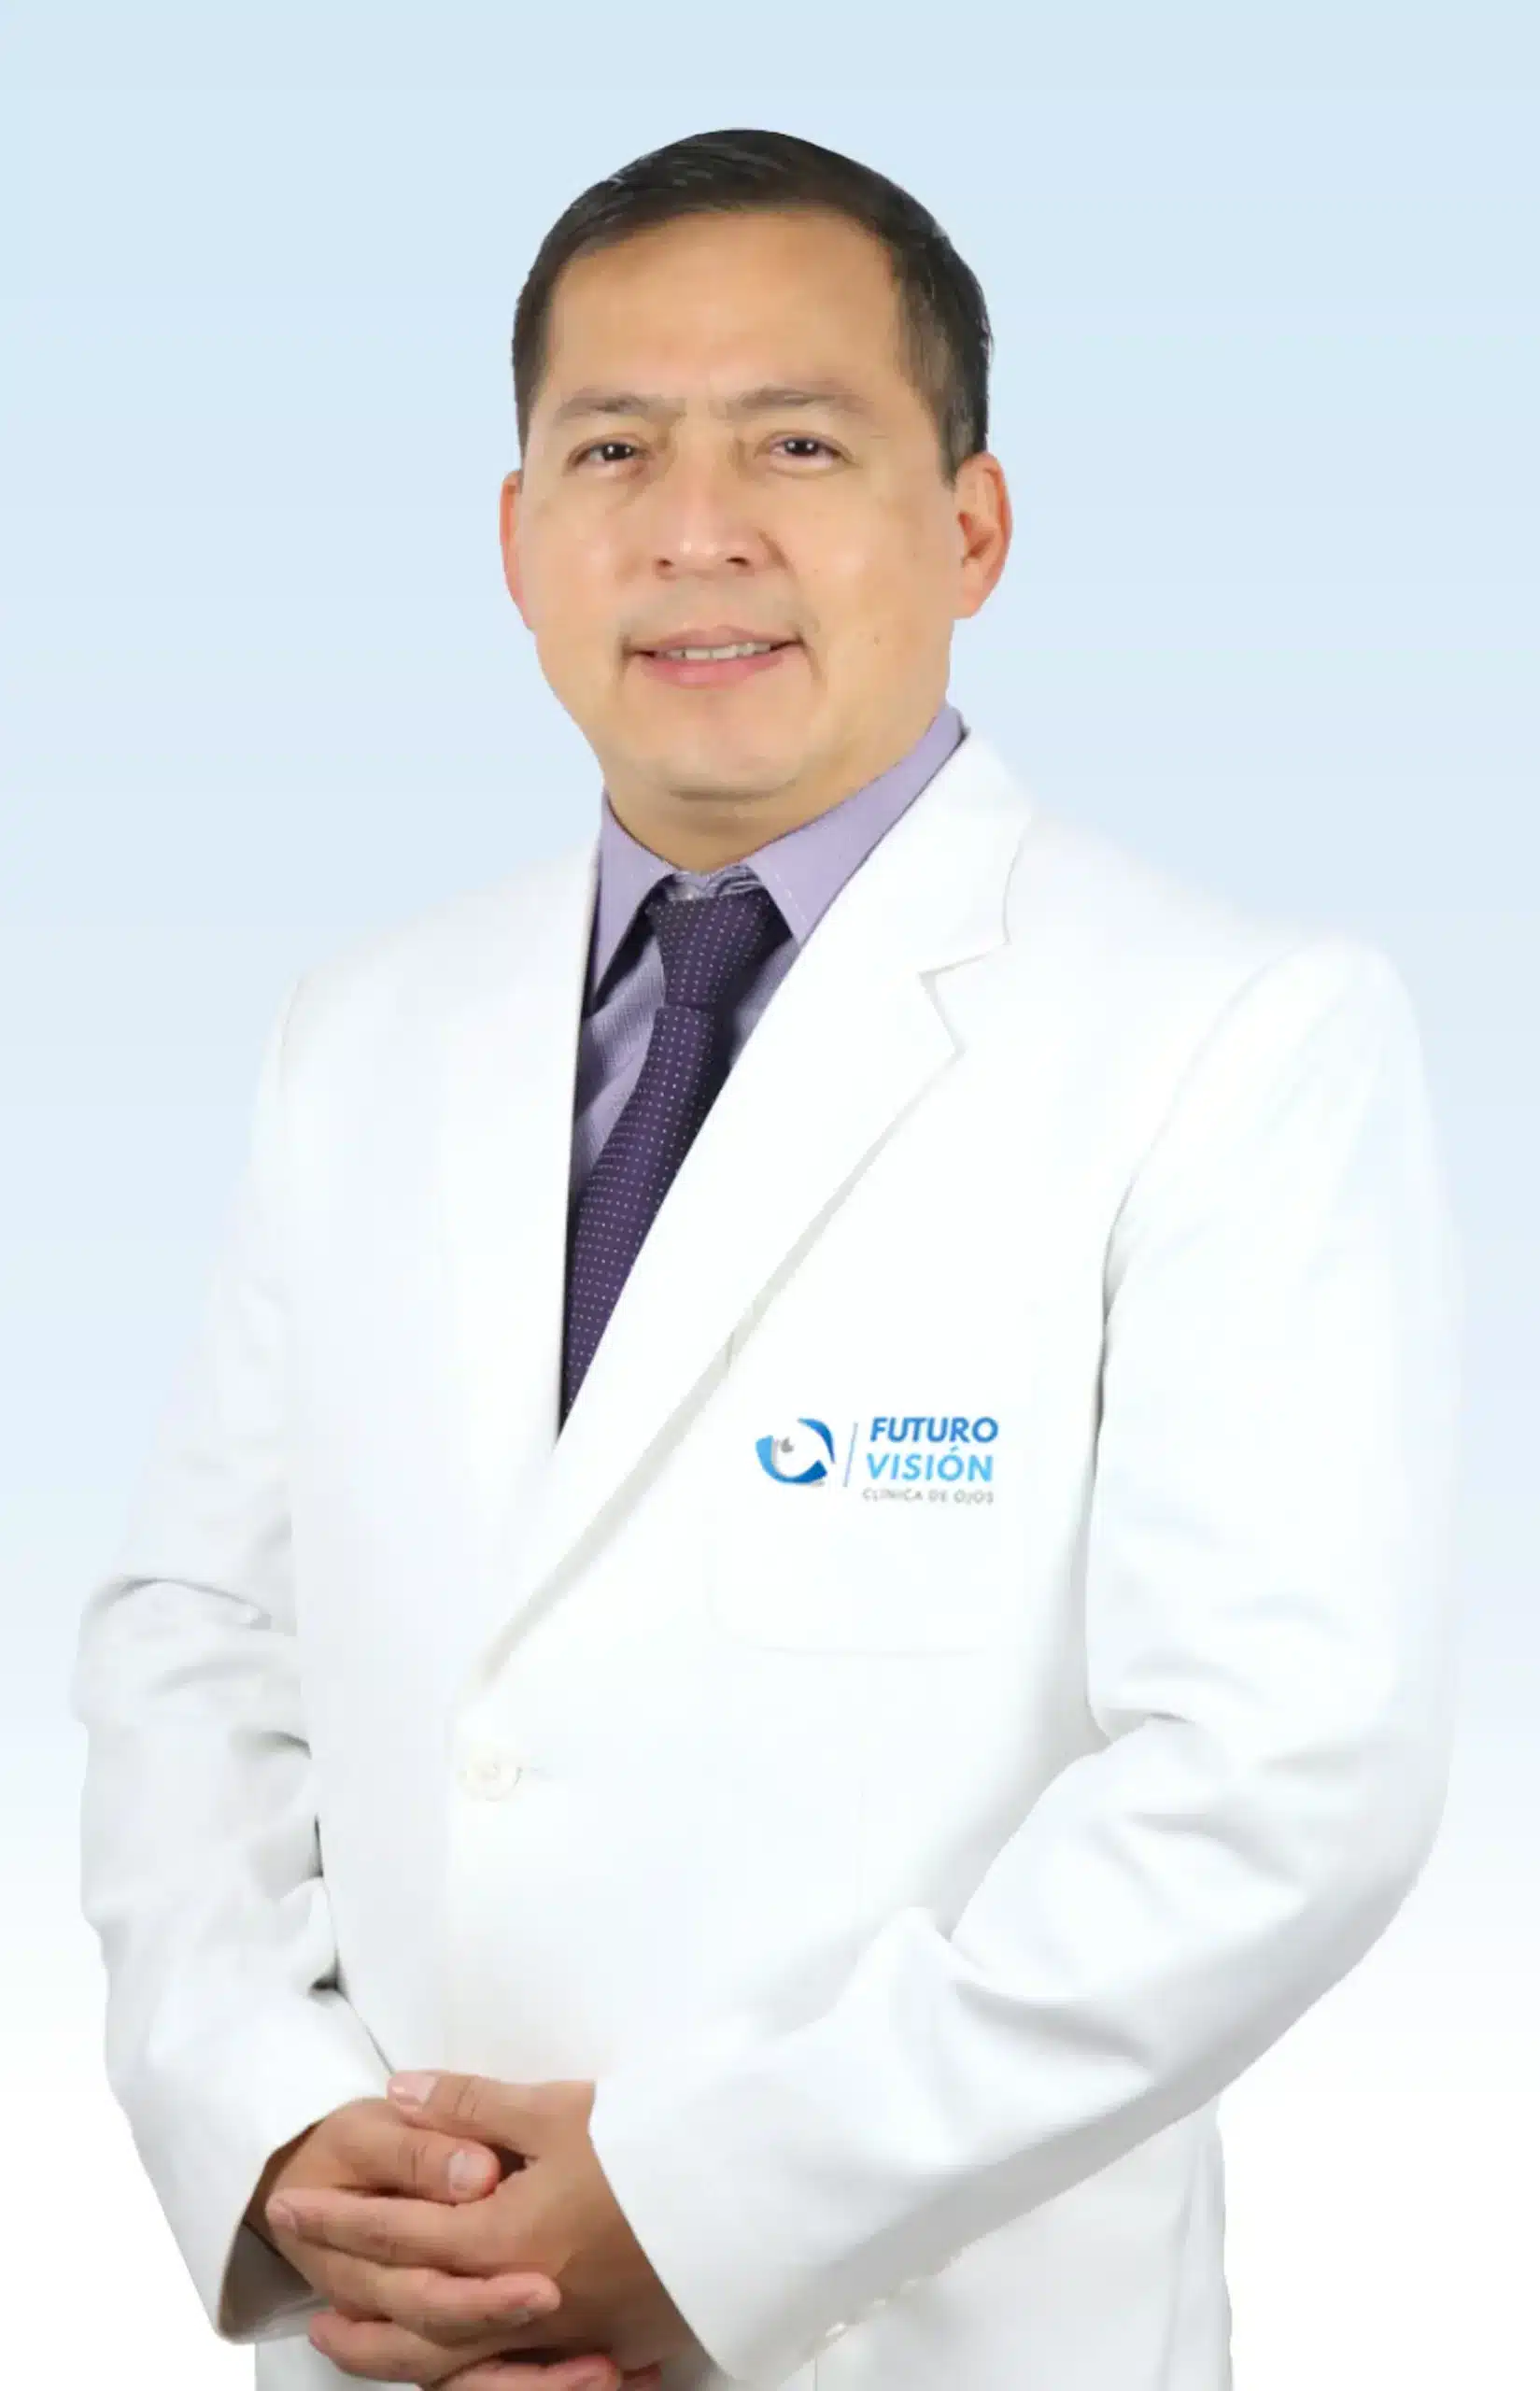 Dr. Alvaro Daniel Caceres Pinto